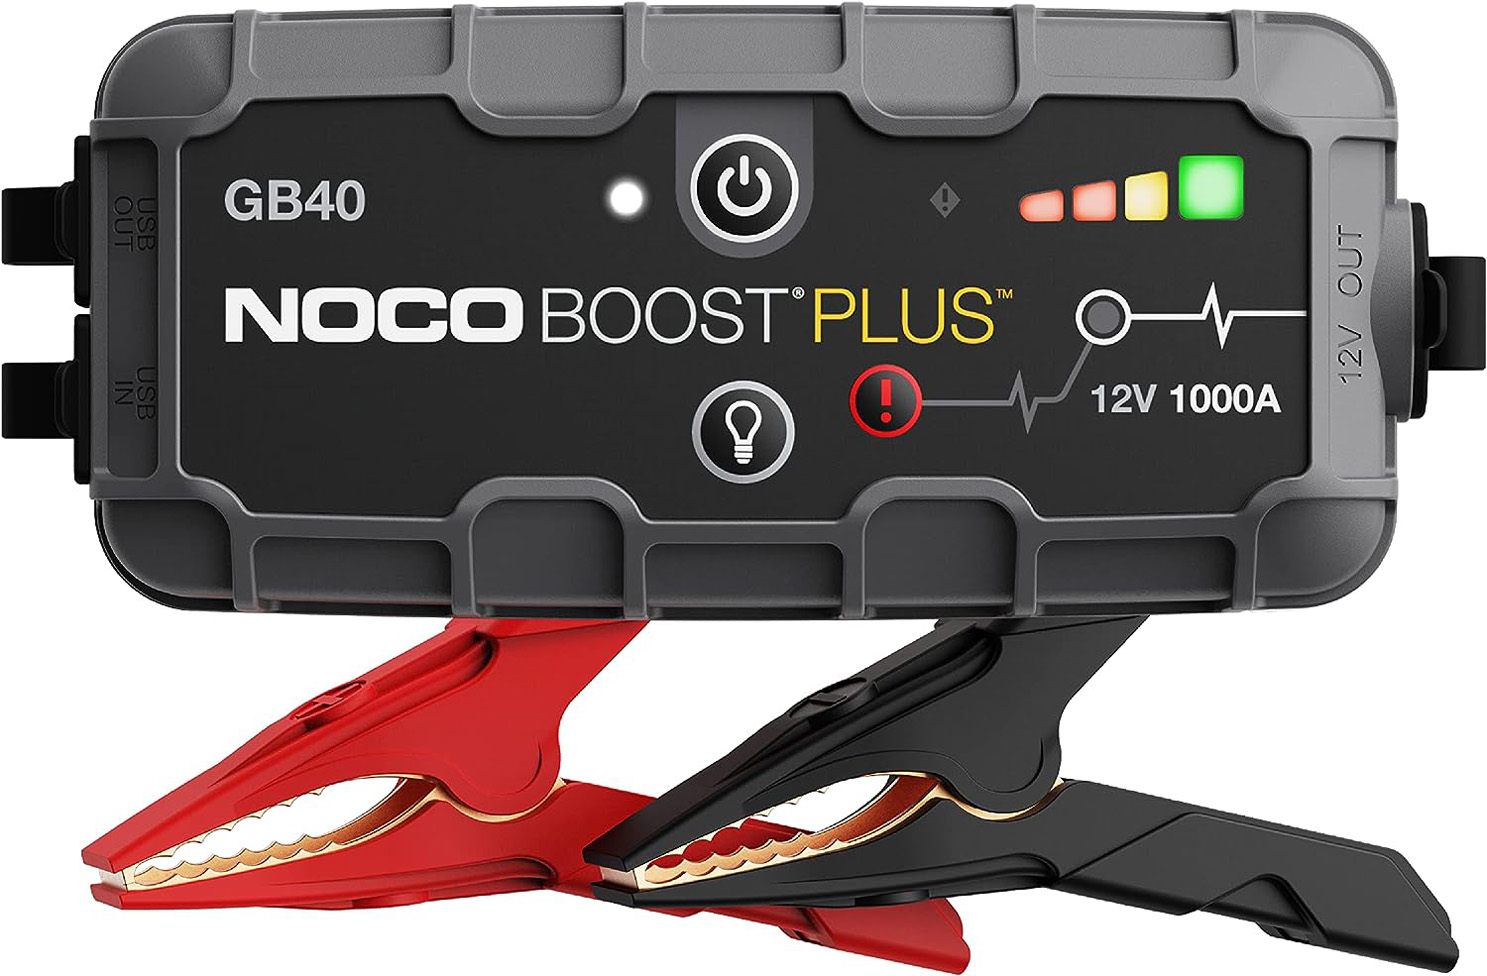 NOCO Boost Plus GB40 1000A UltraSafe Car Battery Jump Starter, 12V Jump Starter Battery Pack